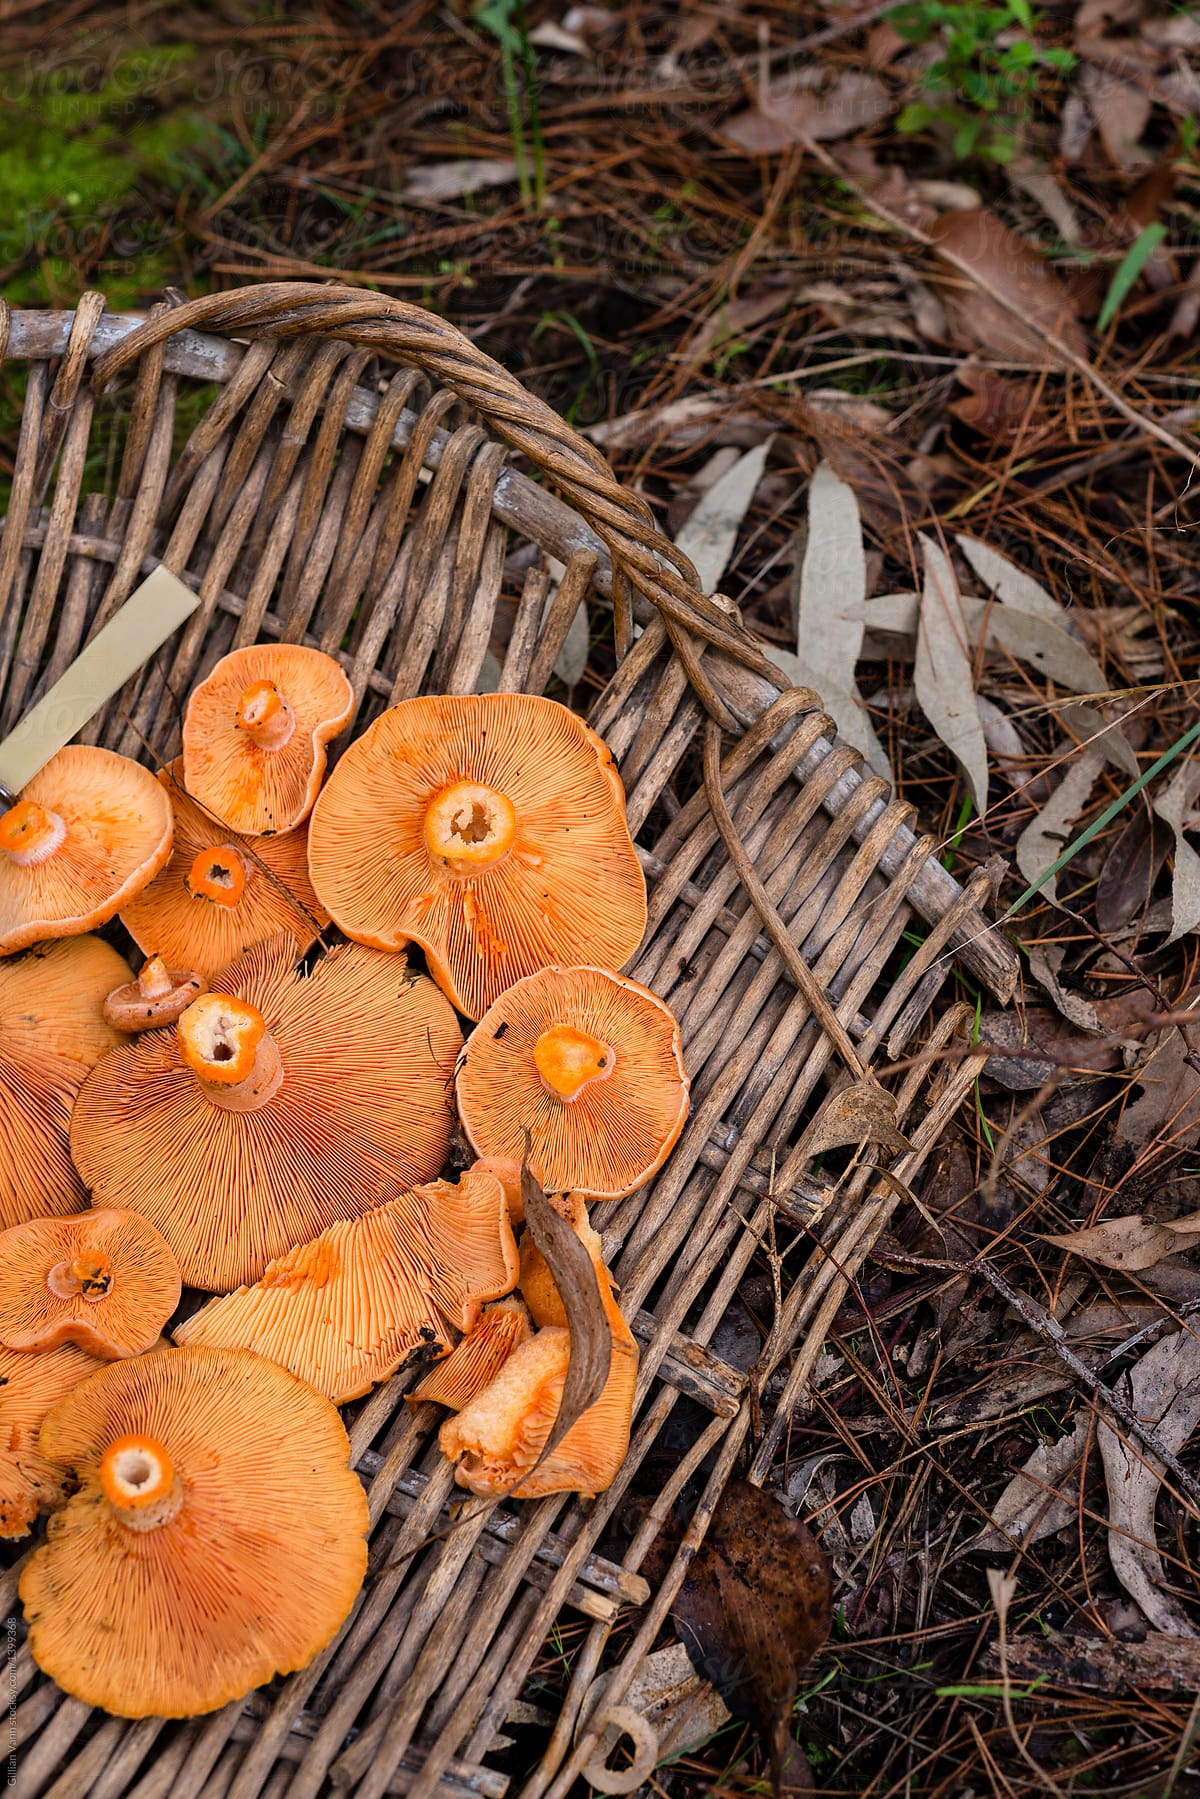 foraged pine mushrooms in a basket